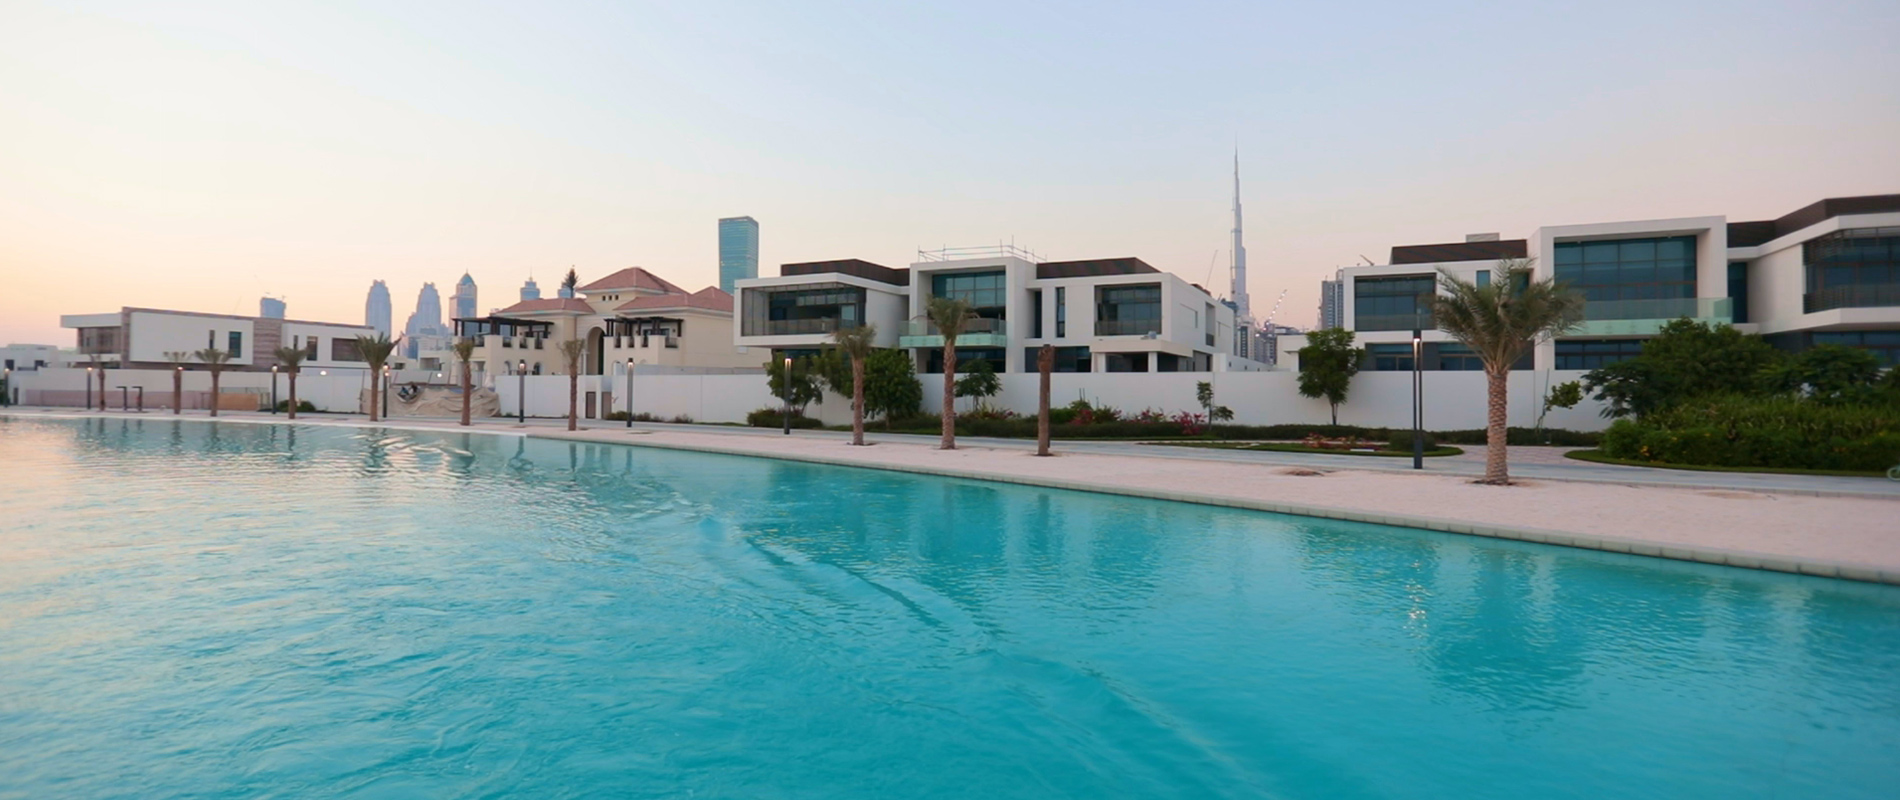 District One Villas Dubai - Luxury House Near Downtown for sale & rent.